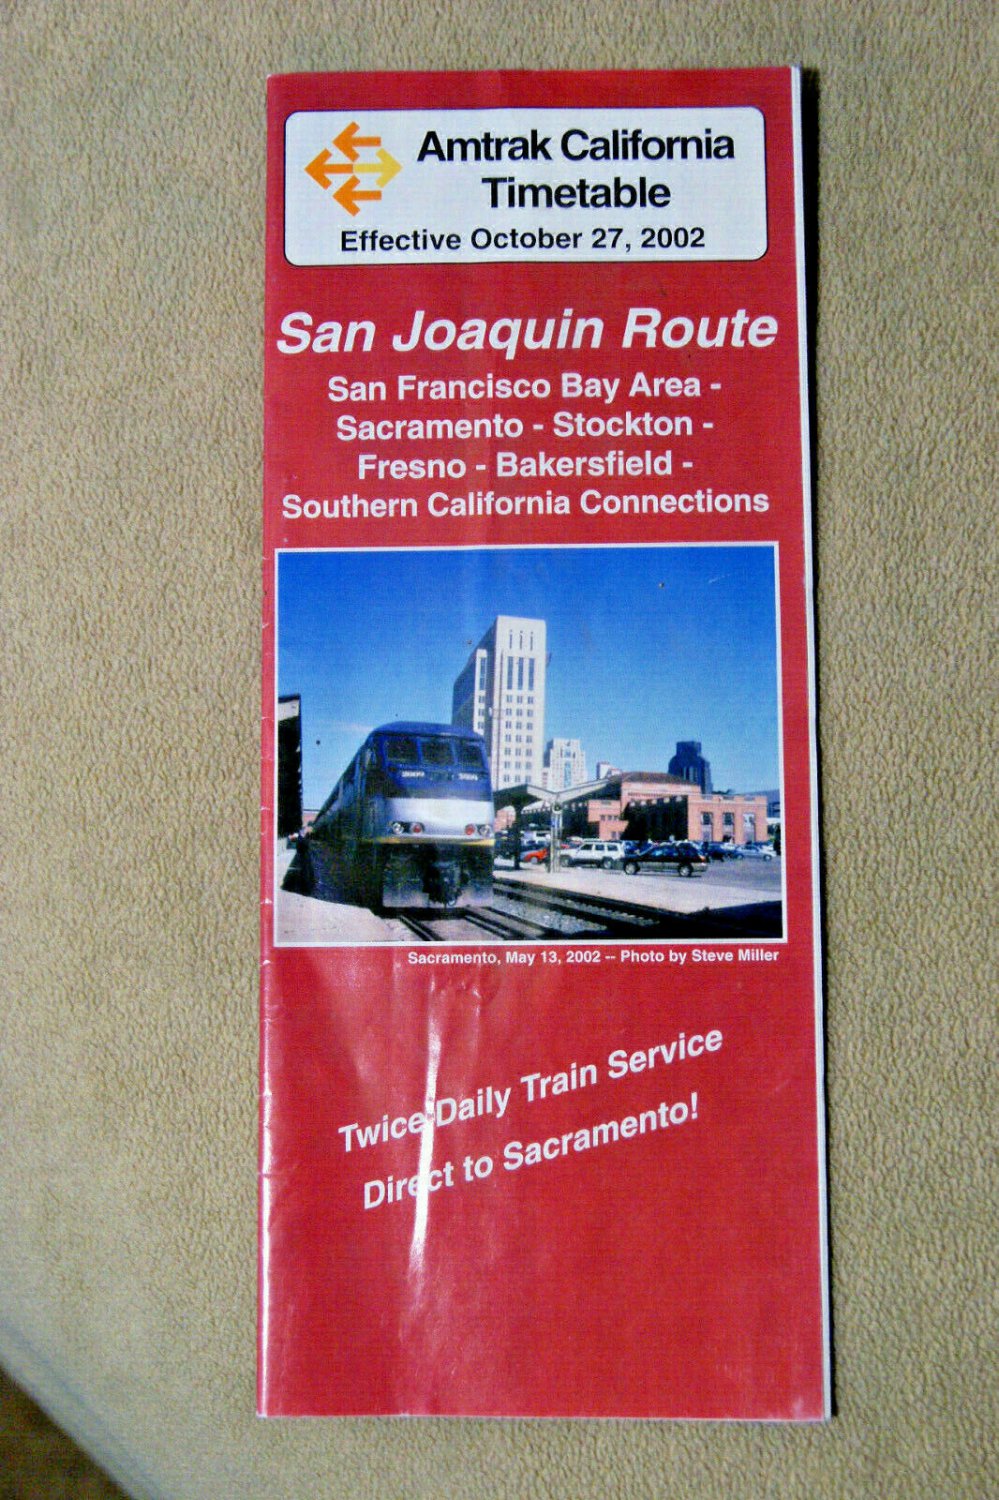 Amtrak California - San Joaquin Route - Oct 27, 2002